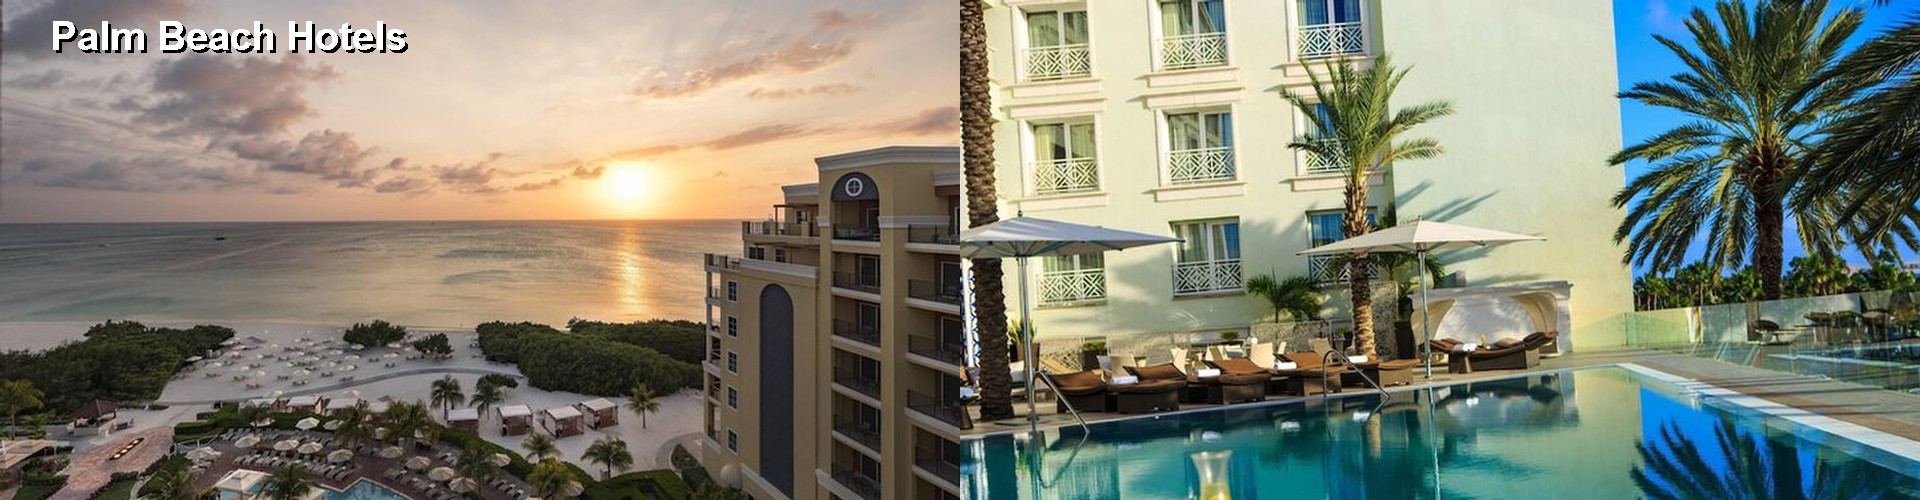 5 Best Hotels near Palm Beach